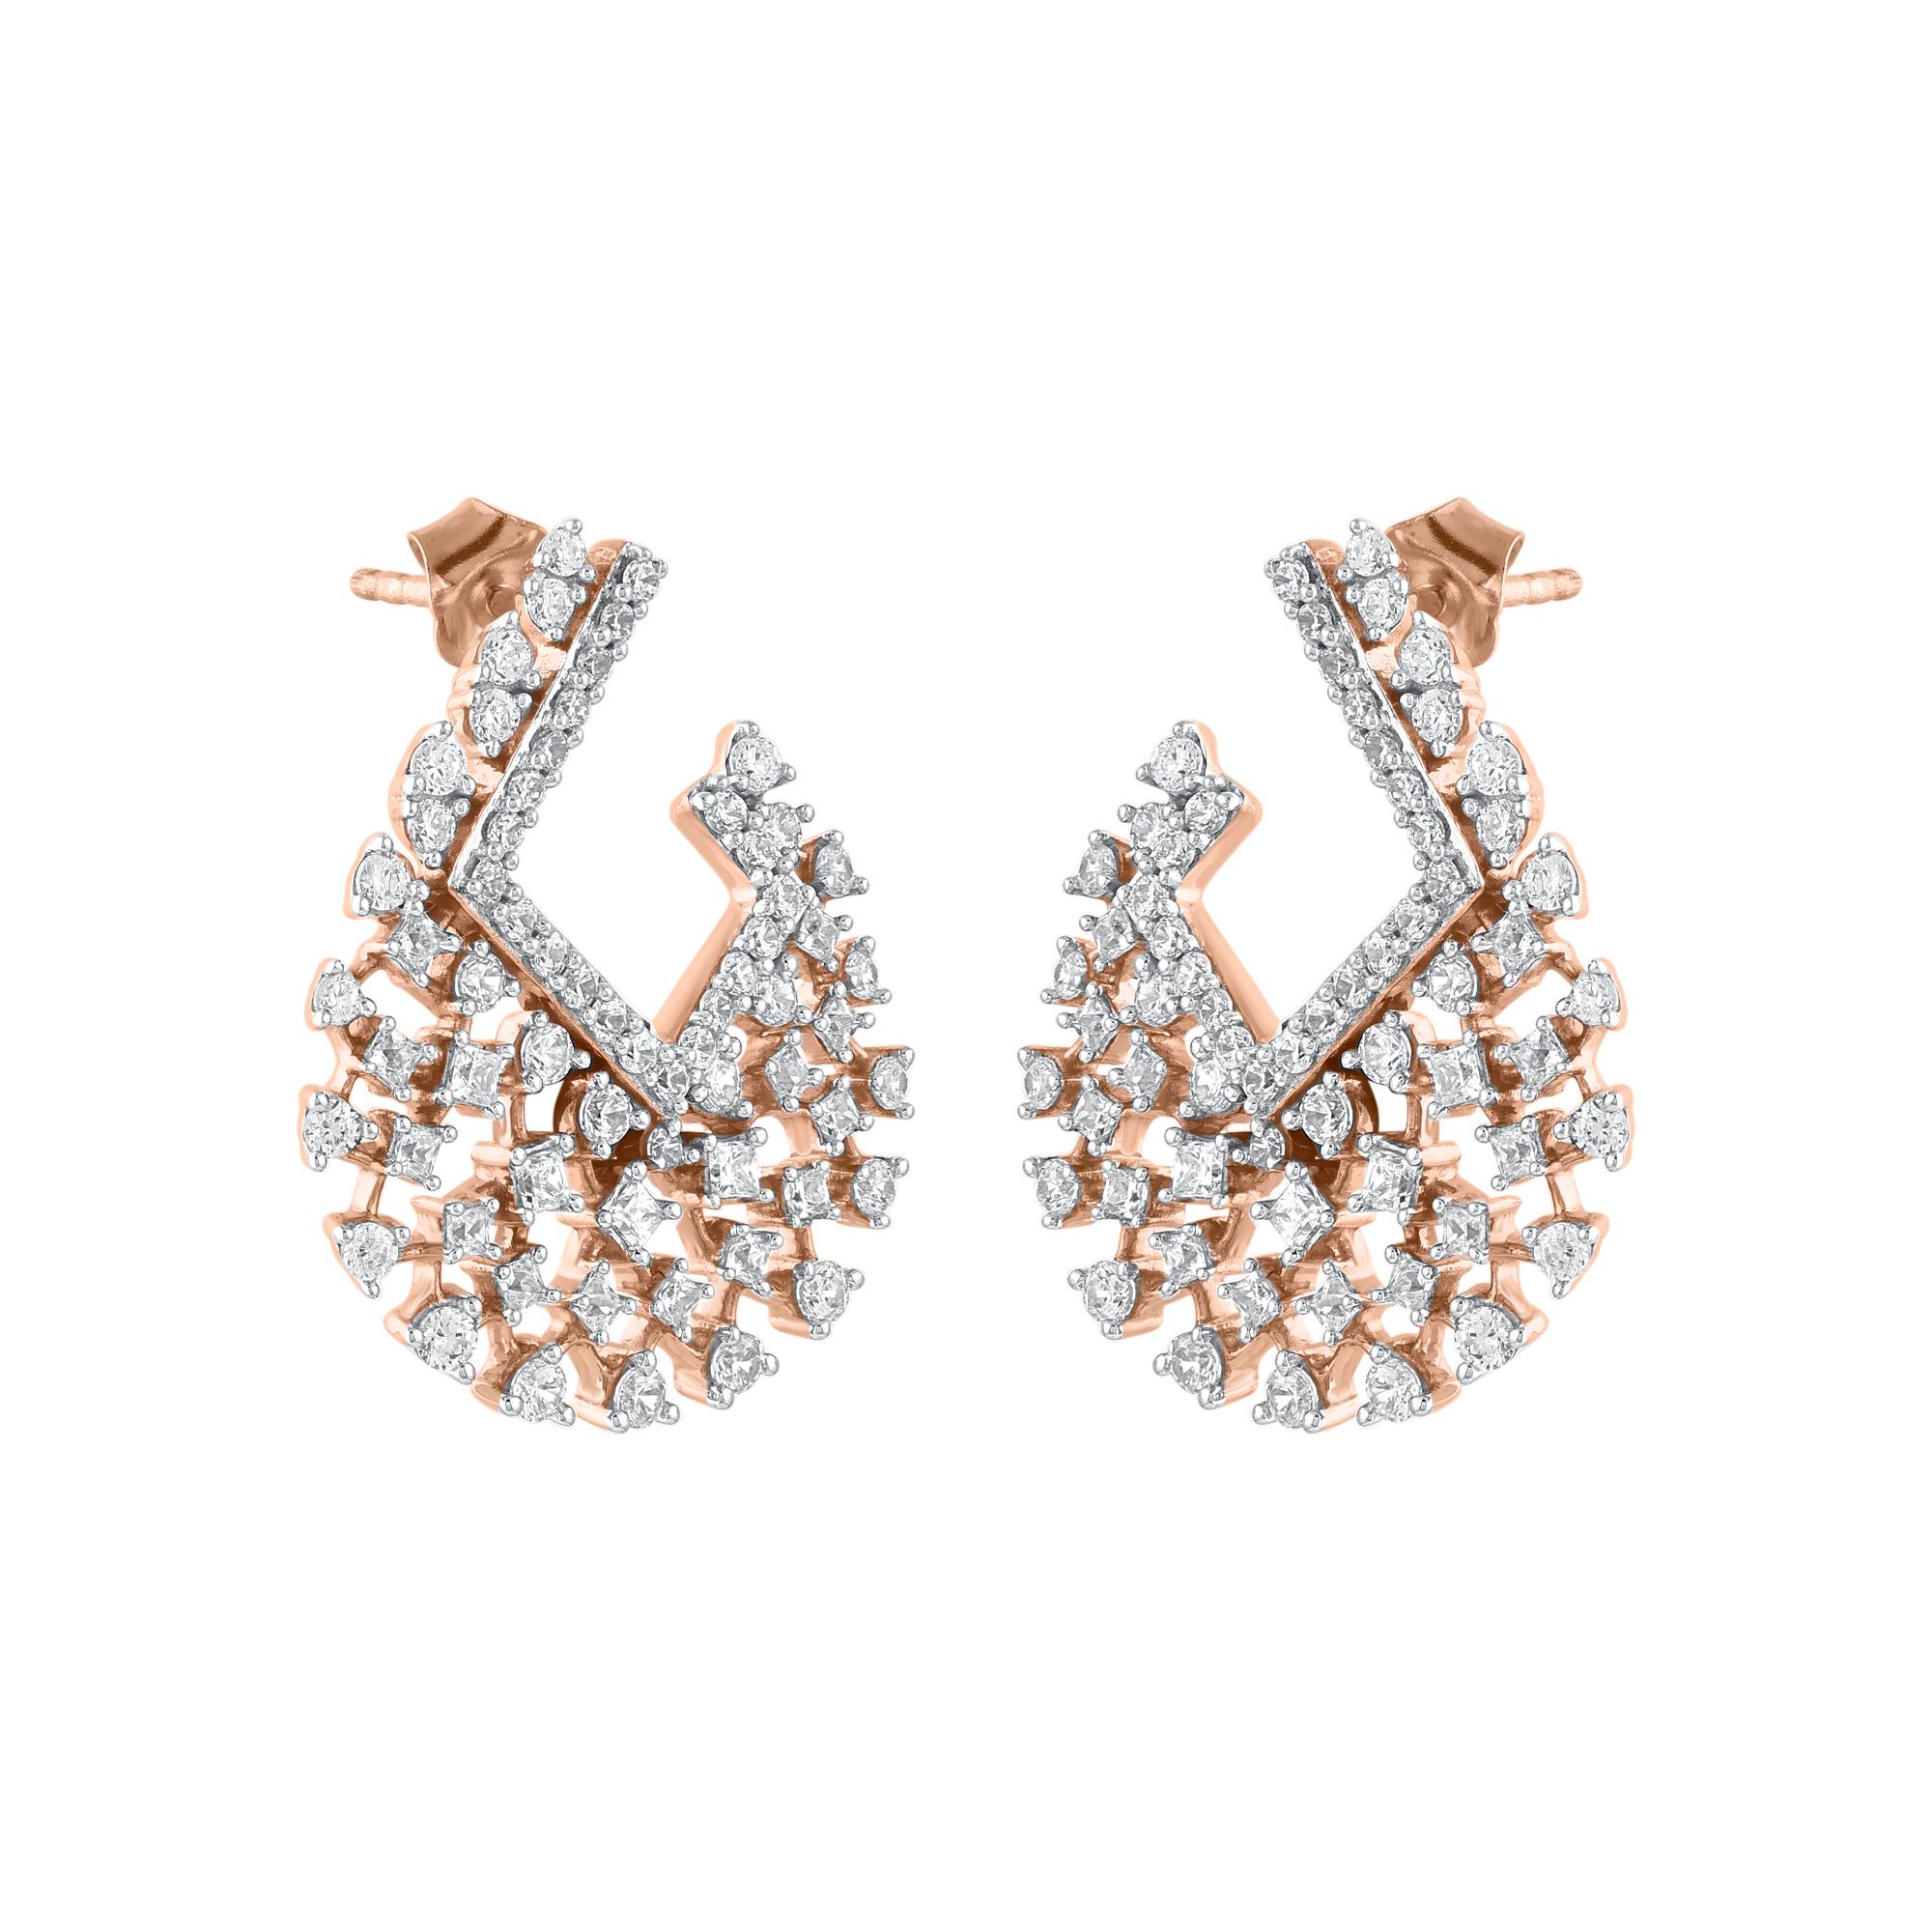 Modern TJD 2.0 Carat Natural Diamonds Designer Stud Earrings in 14 Karat Rose Gold For Sale